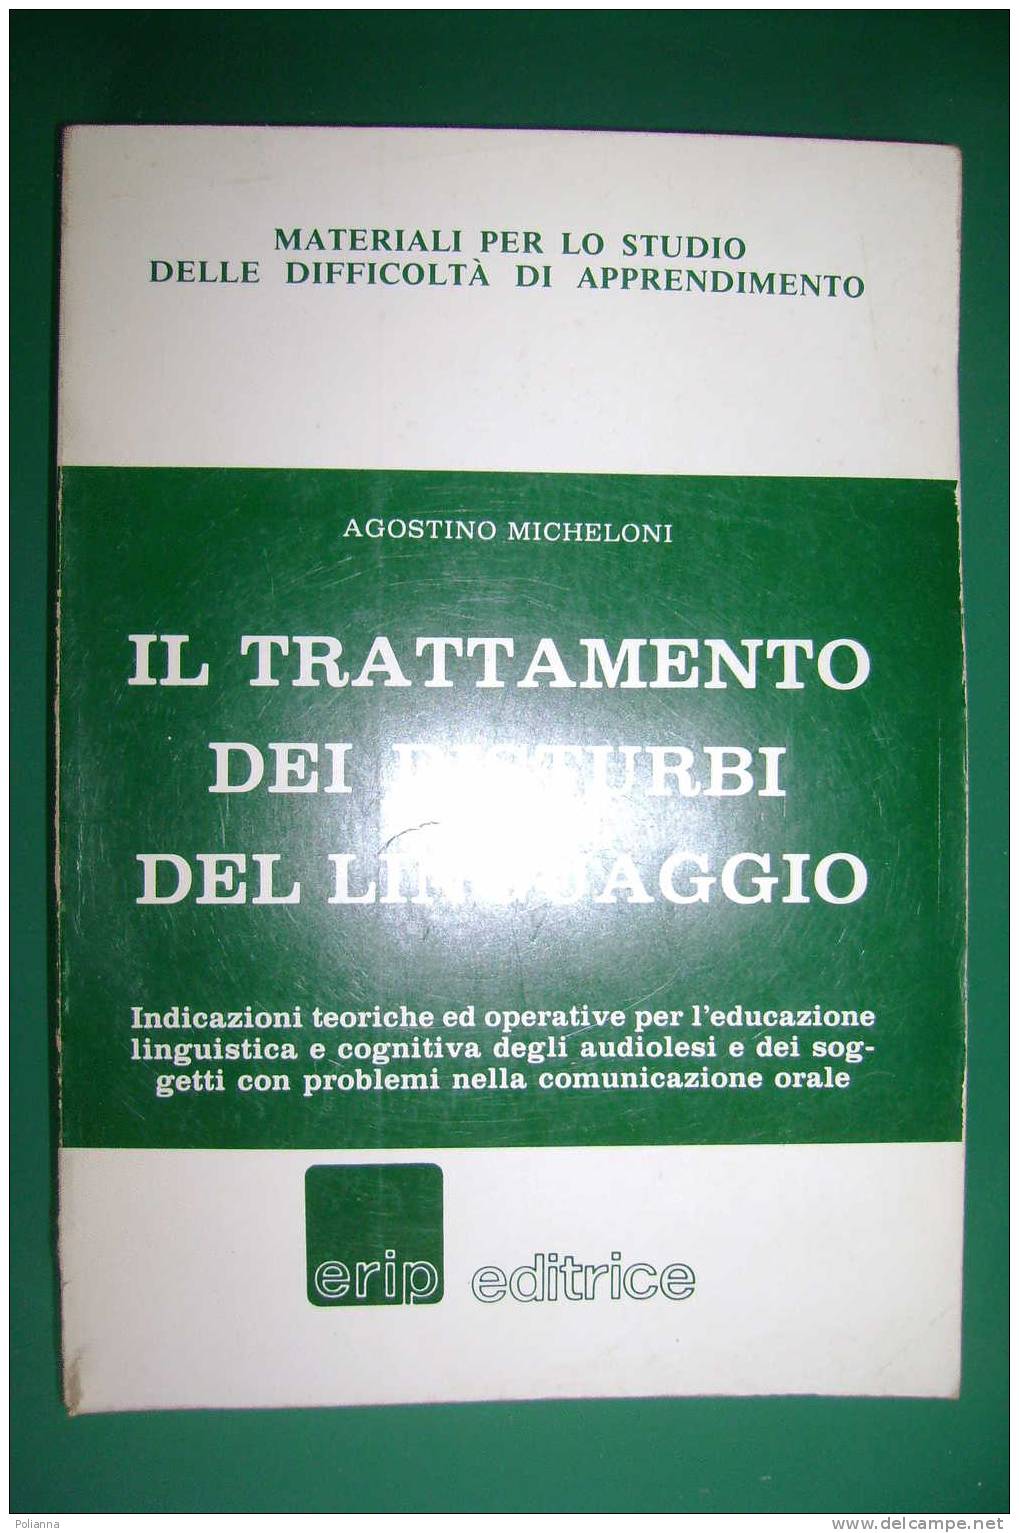 PDW/29 Micheloni TRATTAMENTO DISTURBI LINGUAGGIO Erip 1984 - Medecine, Psychology